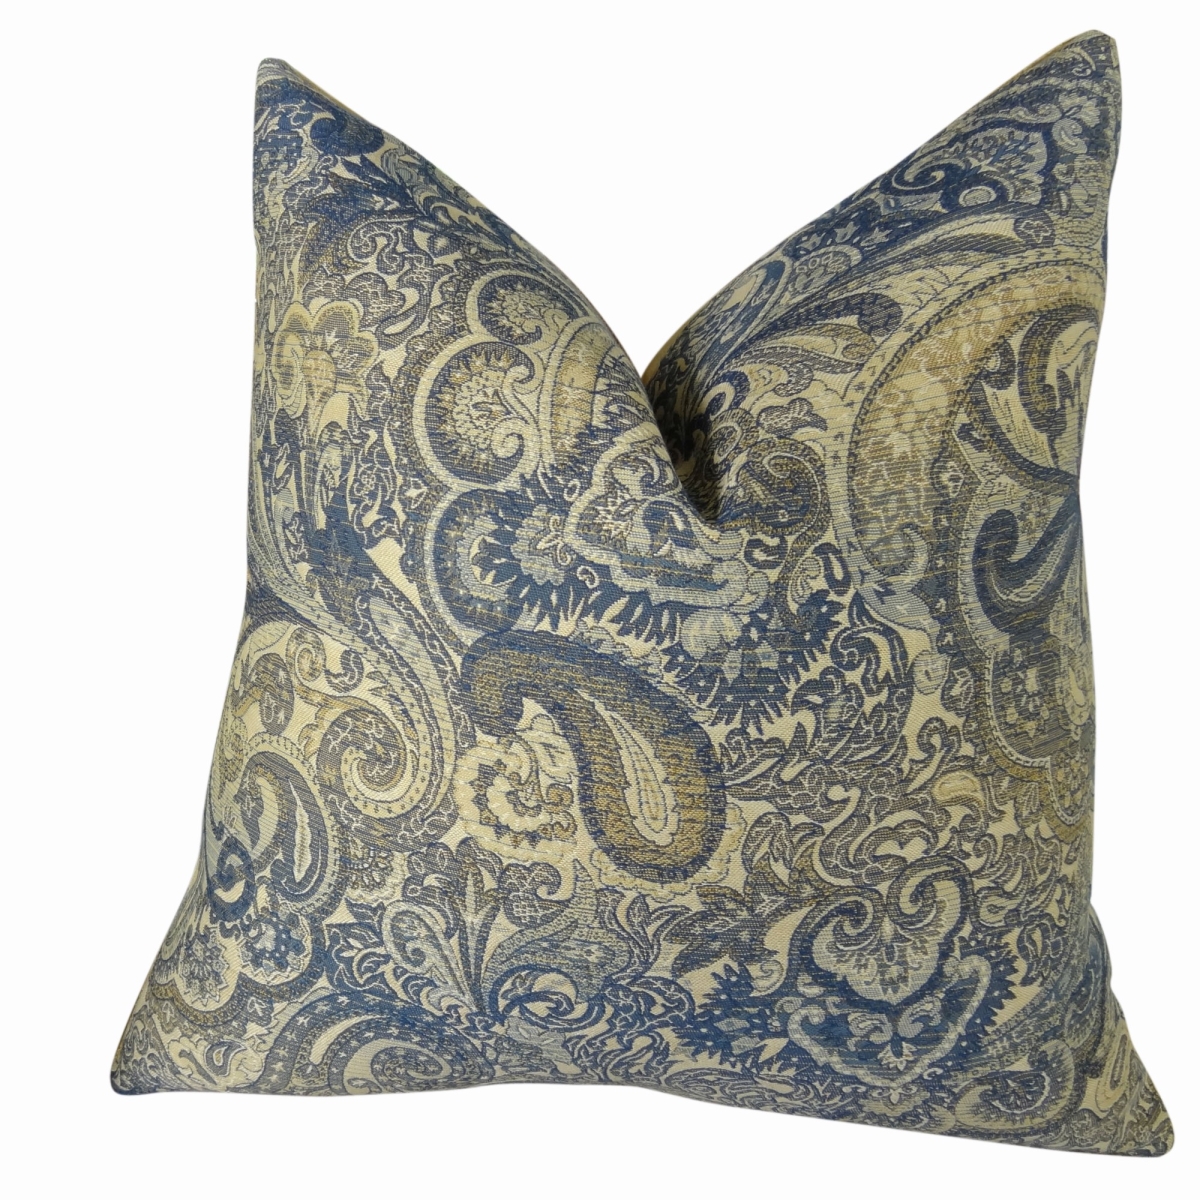 Paciotti Handmade Throw Pillow - Navy - Blue & Taupe - 16 x 16 in -  DwellingDesigns, DW3132109